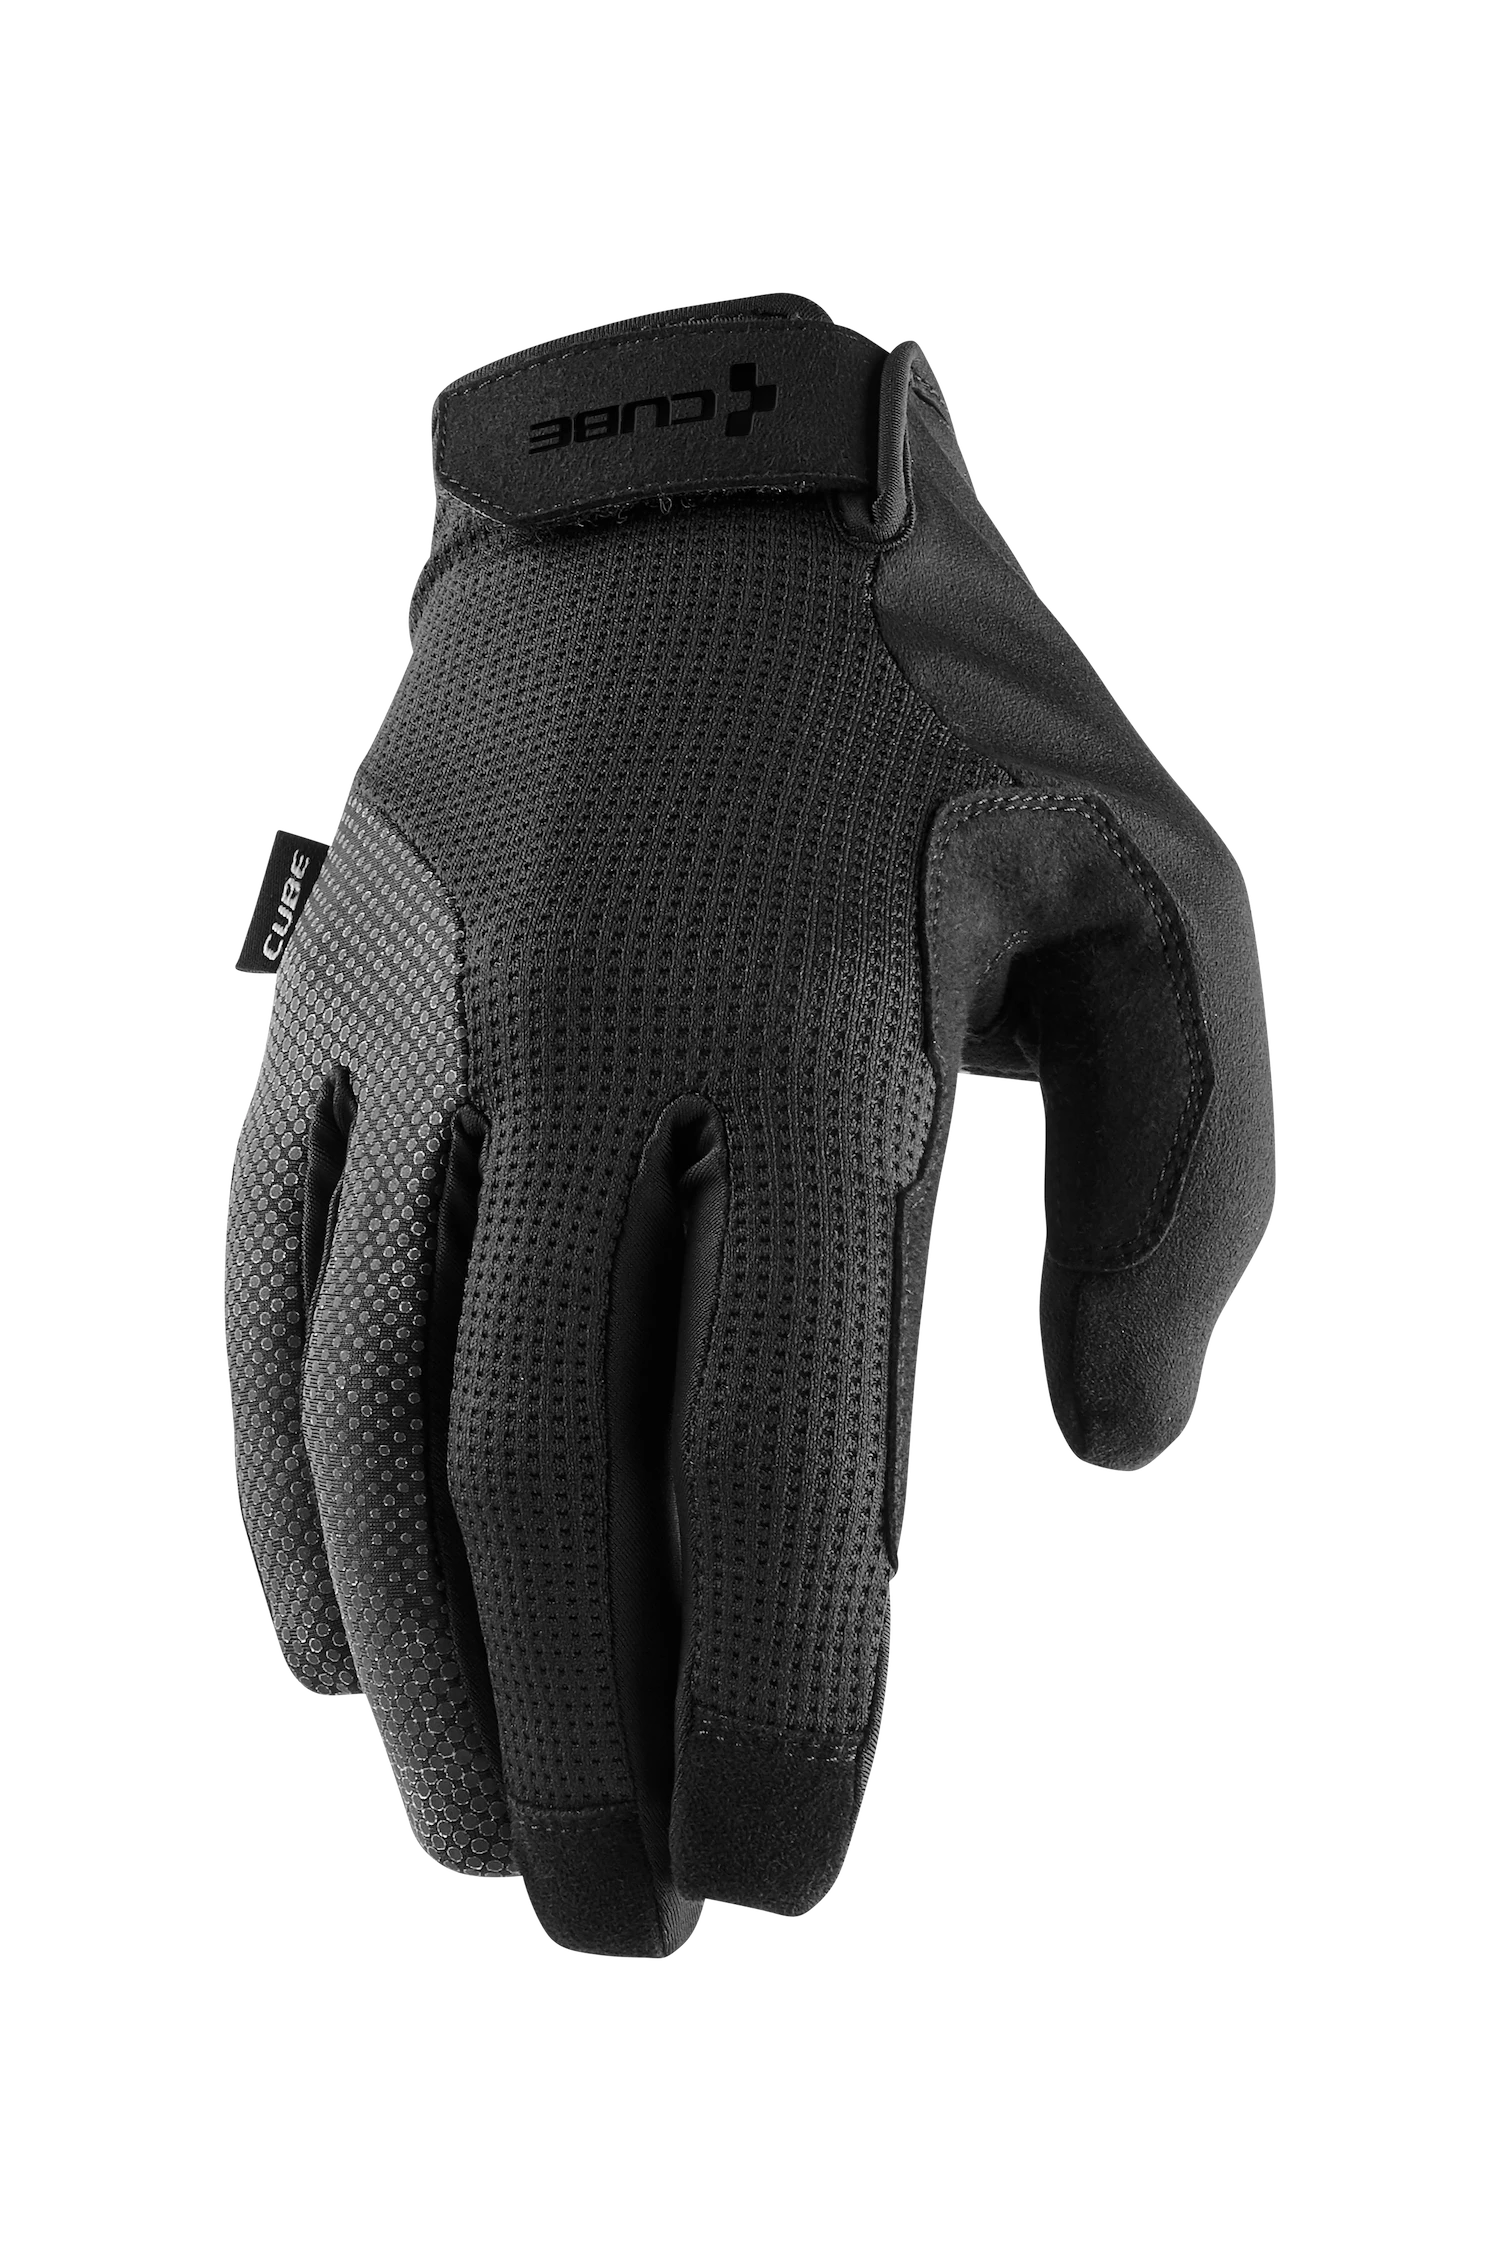 CUBE Handschuhe CMPT COMFORT black´n grey langfinger